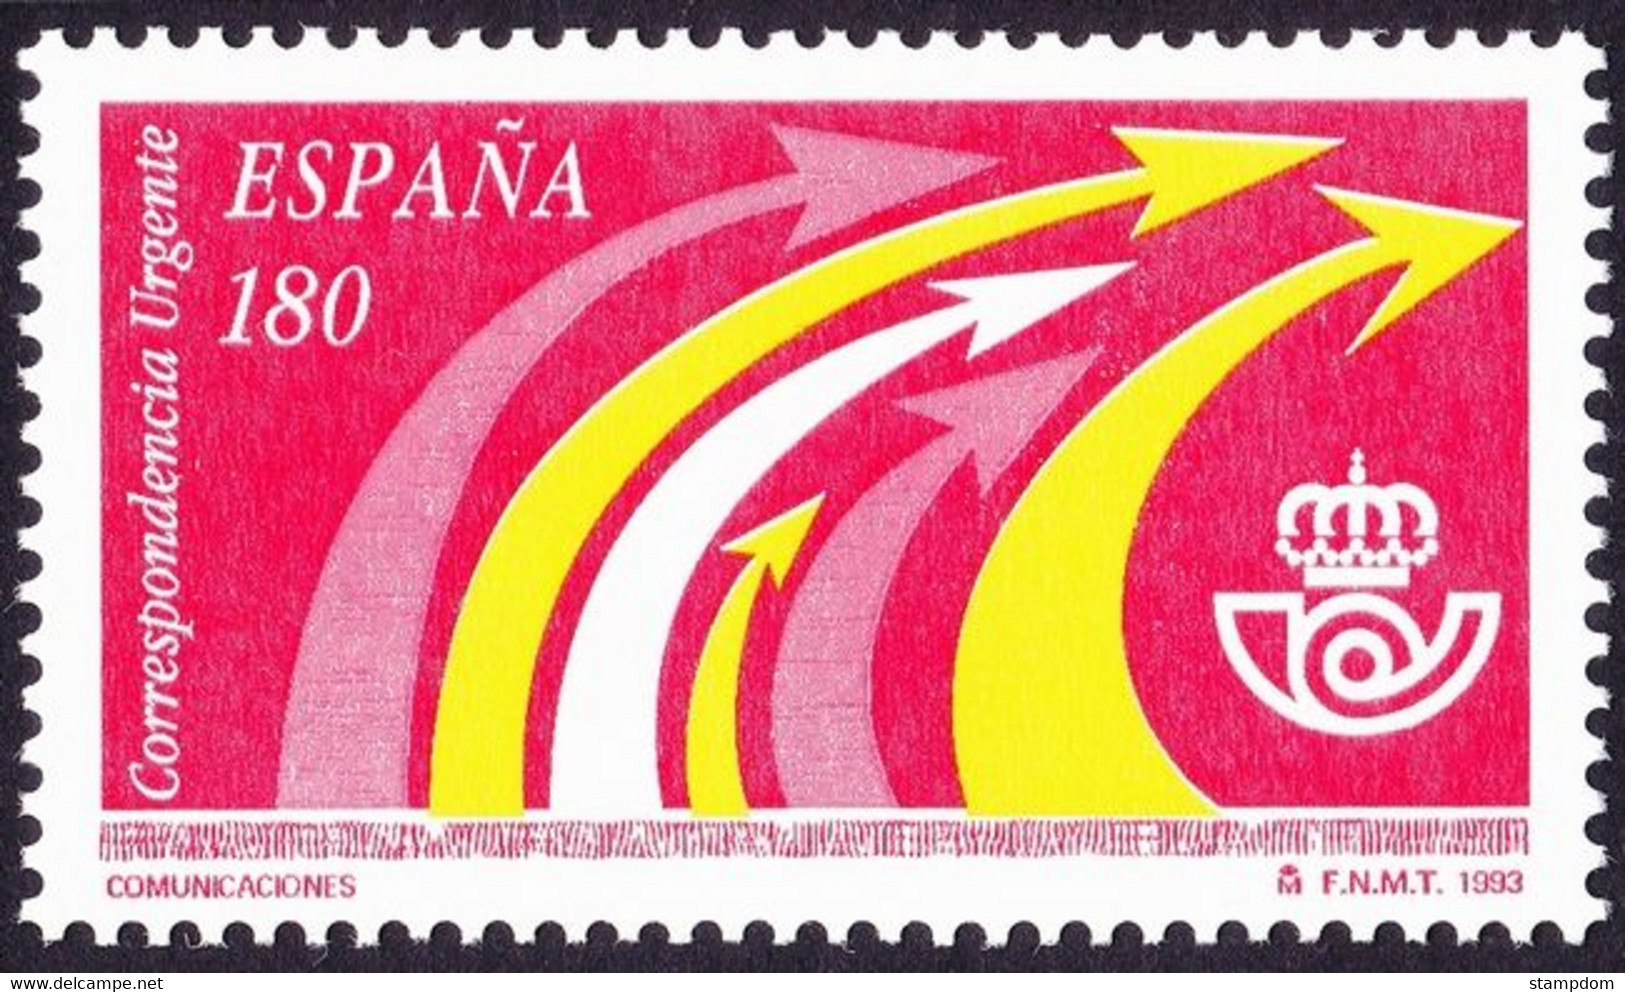 SPAIN 1993 Special Delivery Sc#E28 MNH @S4502 - Correo Urgente